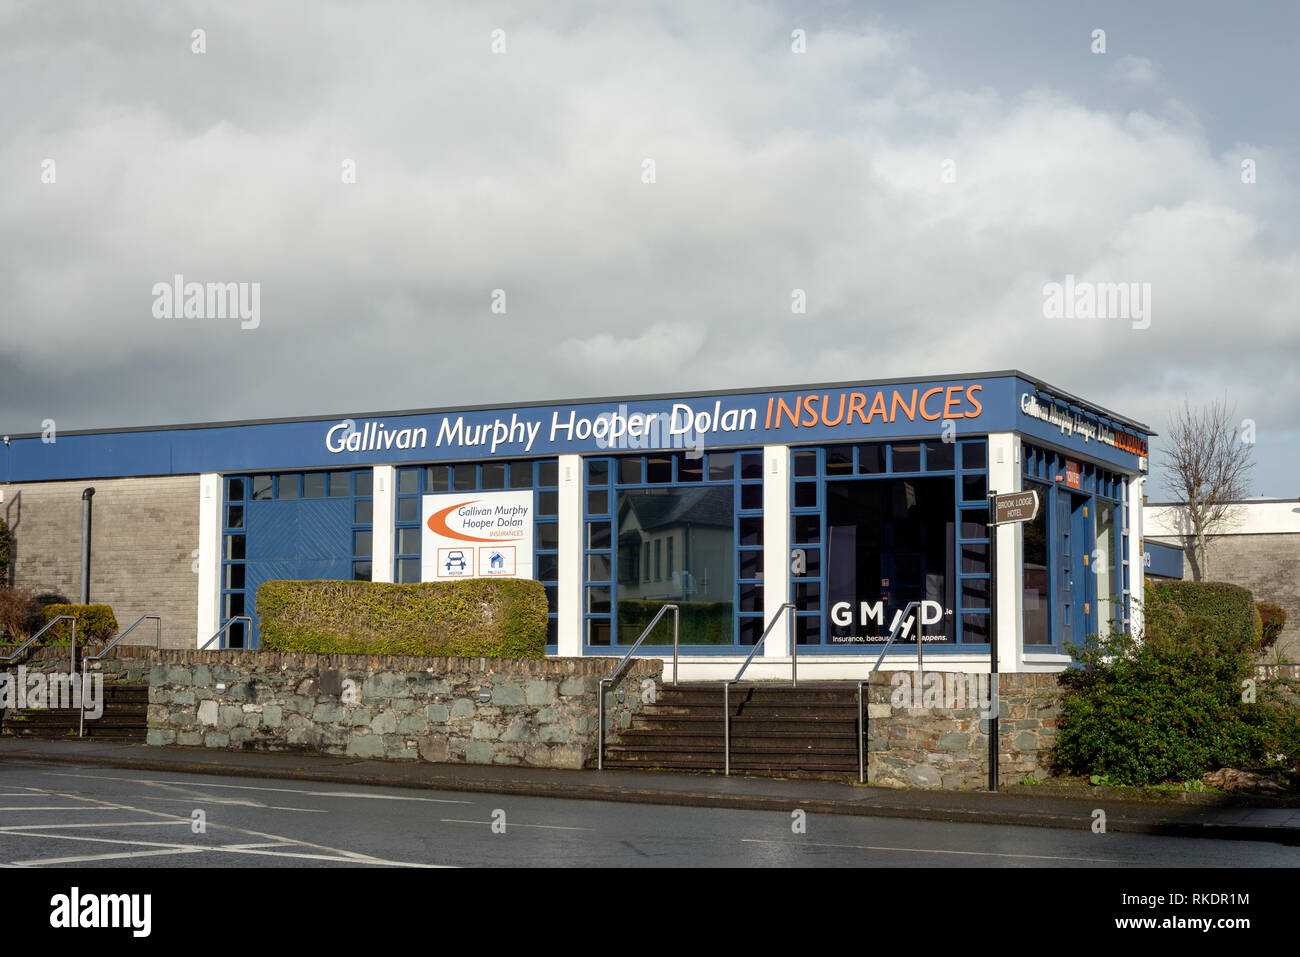 Gallivan Murphy Hooper Dolan insurances building in Killarney, County Kerry, Ireland Stock Photo